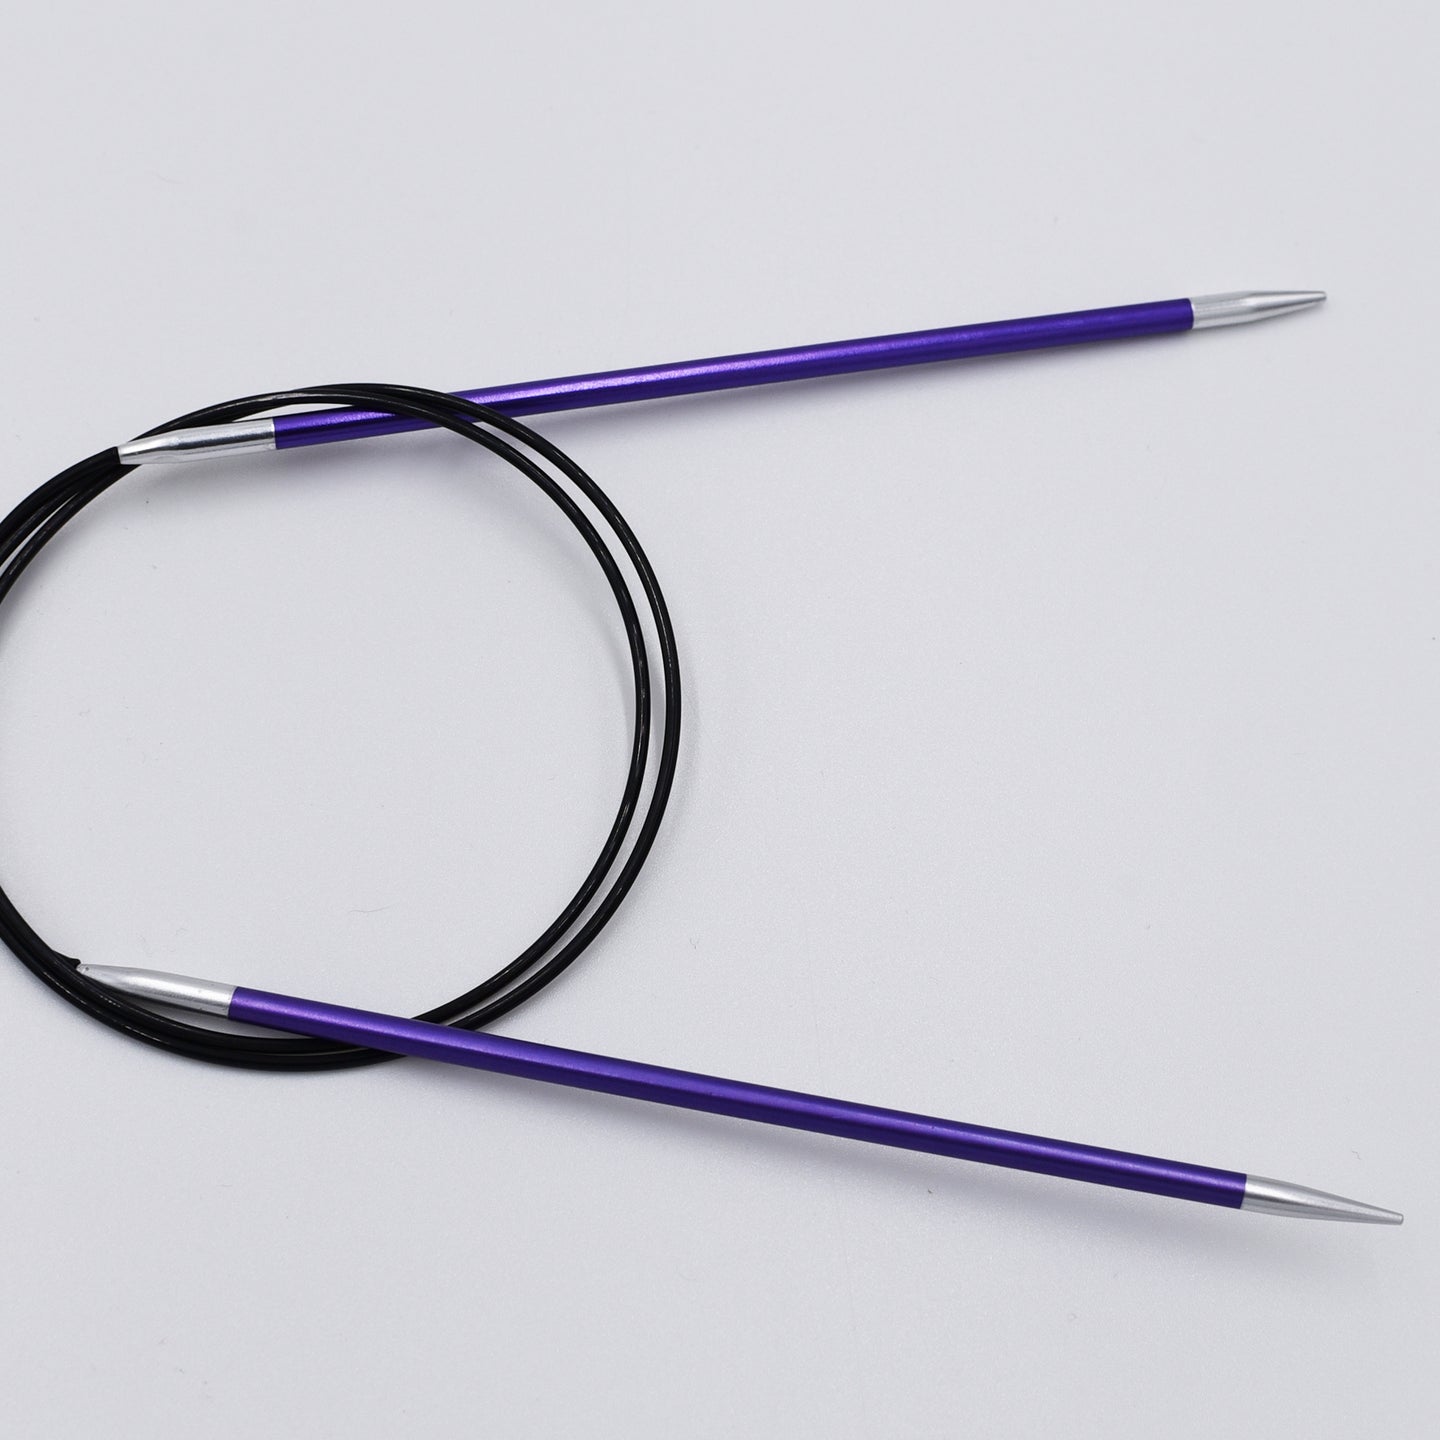 Circular fixed needles - 3.75mm & 80cm